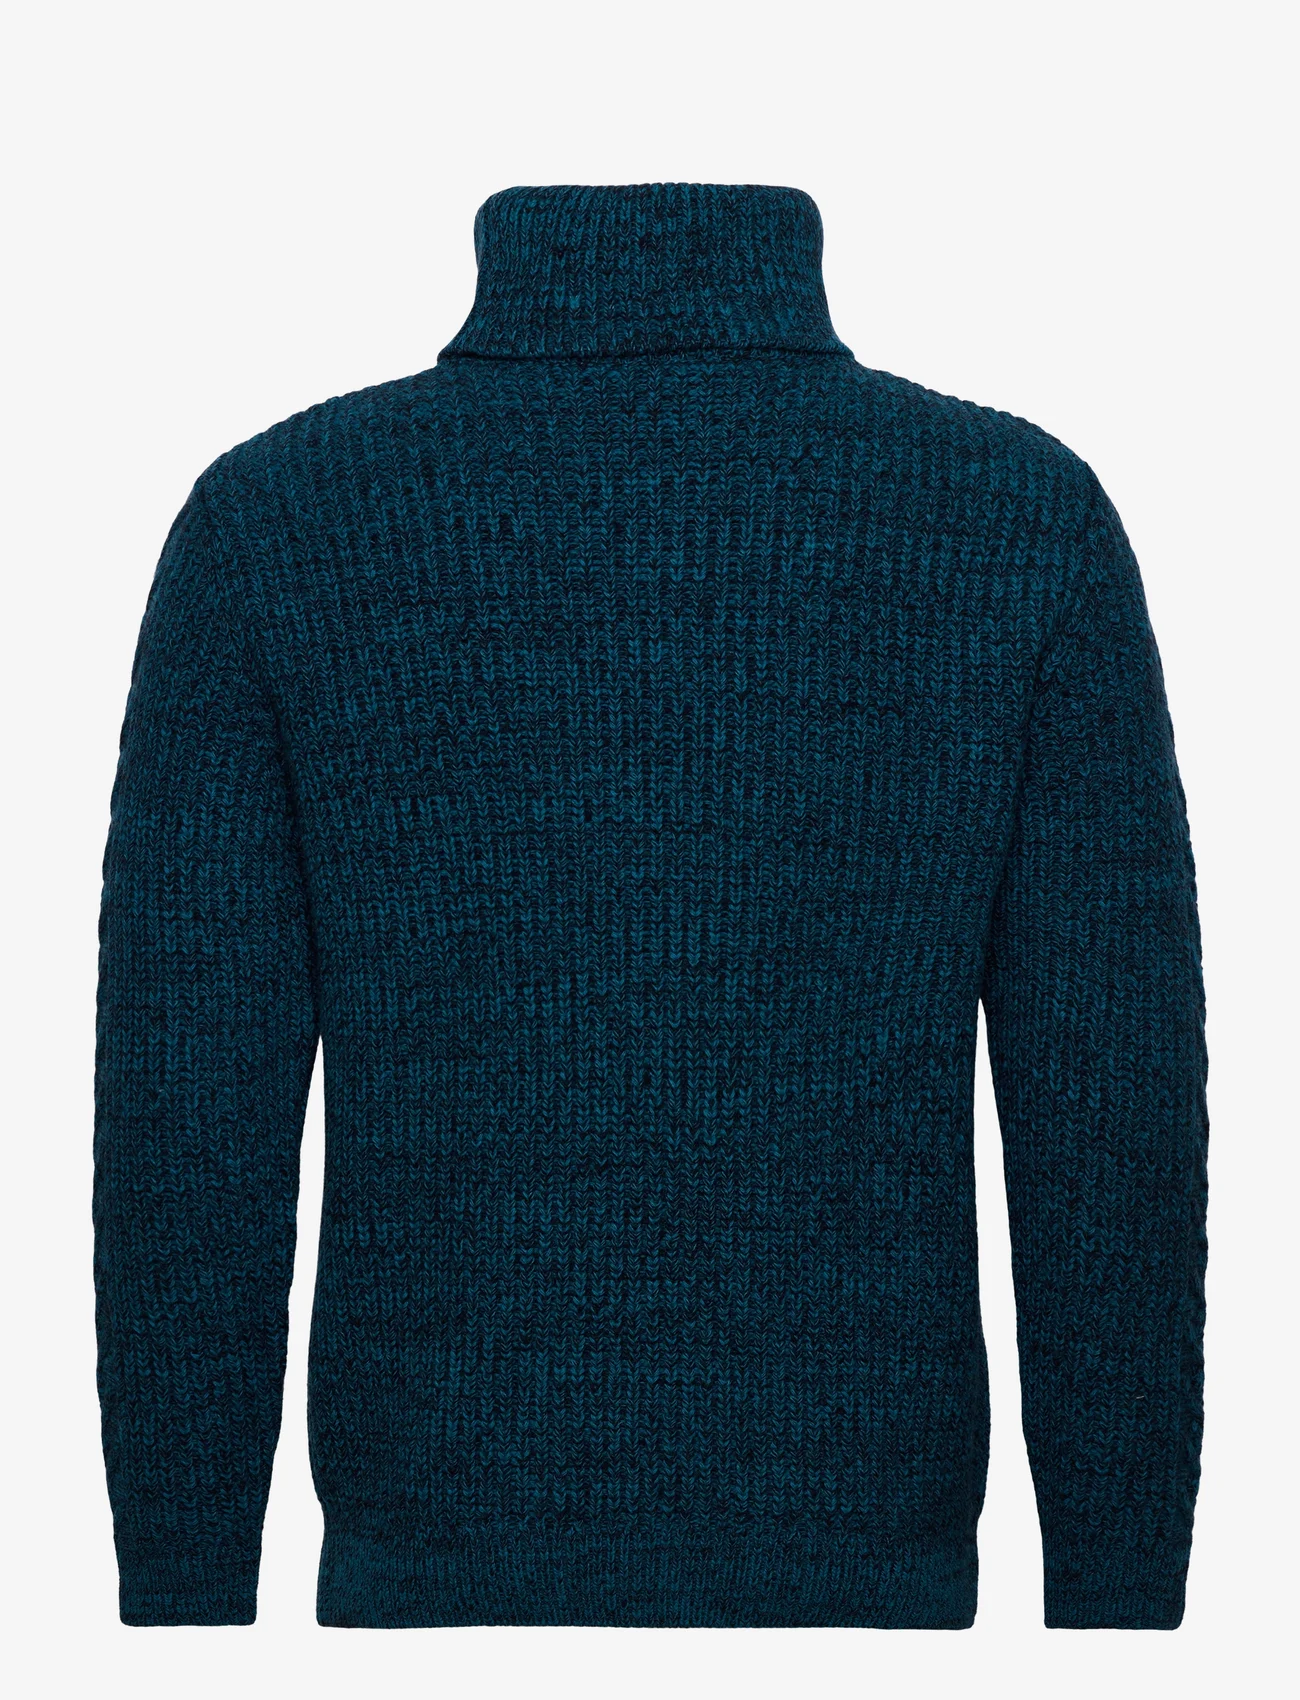 Armor Lux - Turtle neck Sweater Héritage - poolokaulus - moulinÉ bleu glacial - 1